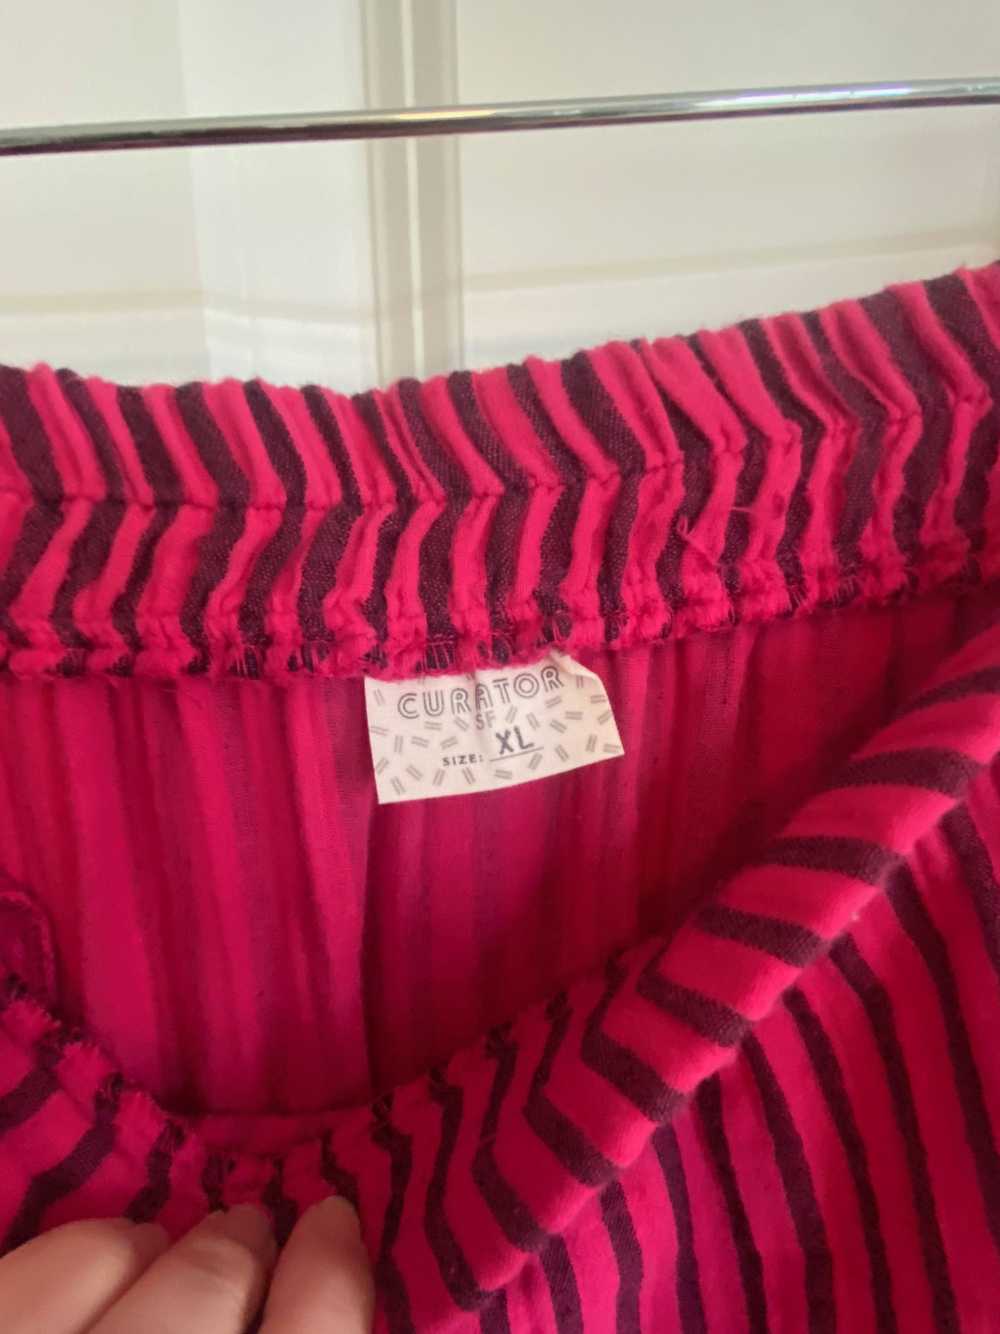 Curator SF Fawn Skirt Stripe - image 2